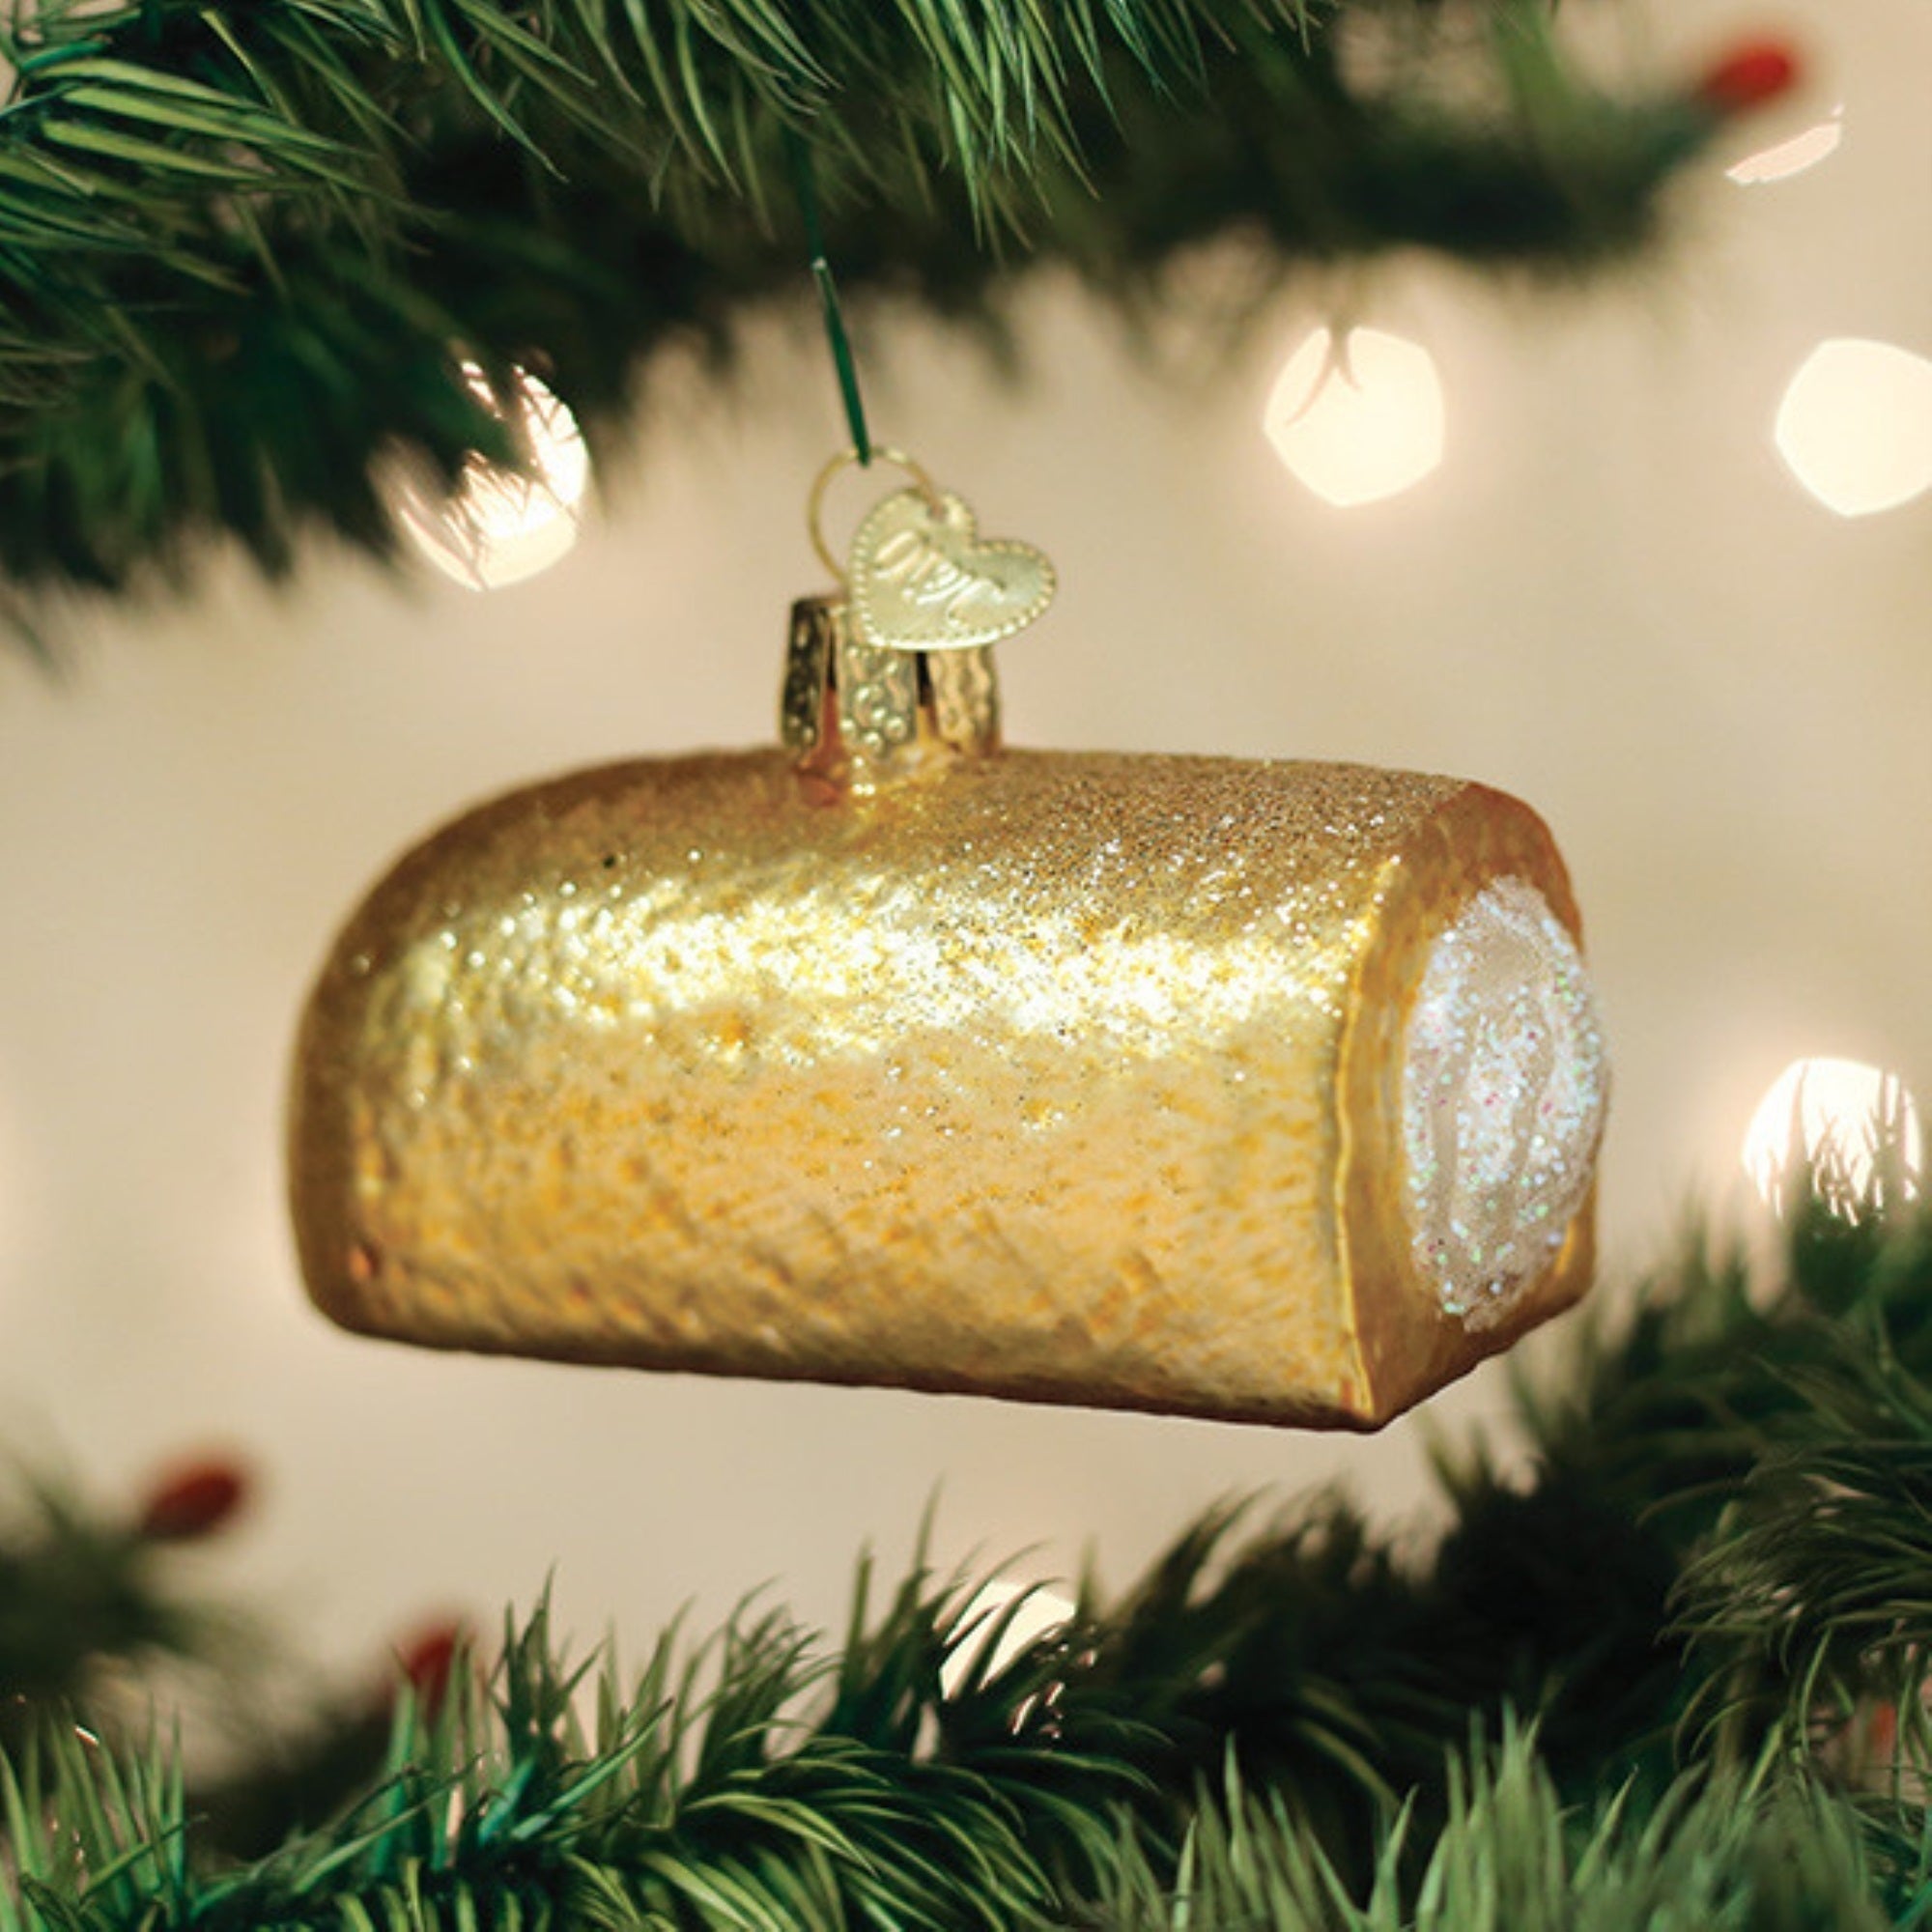 Old World Christmas Hostess Twinkie Glassblown Ornament